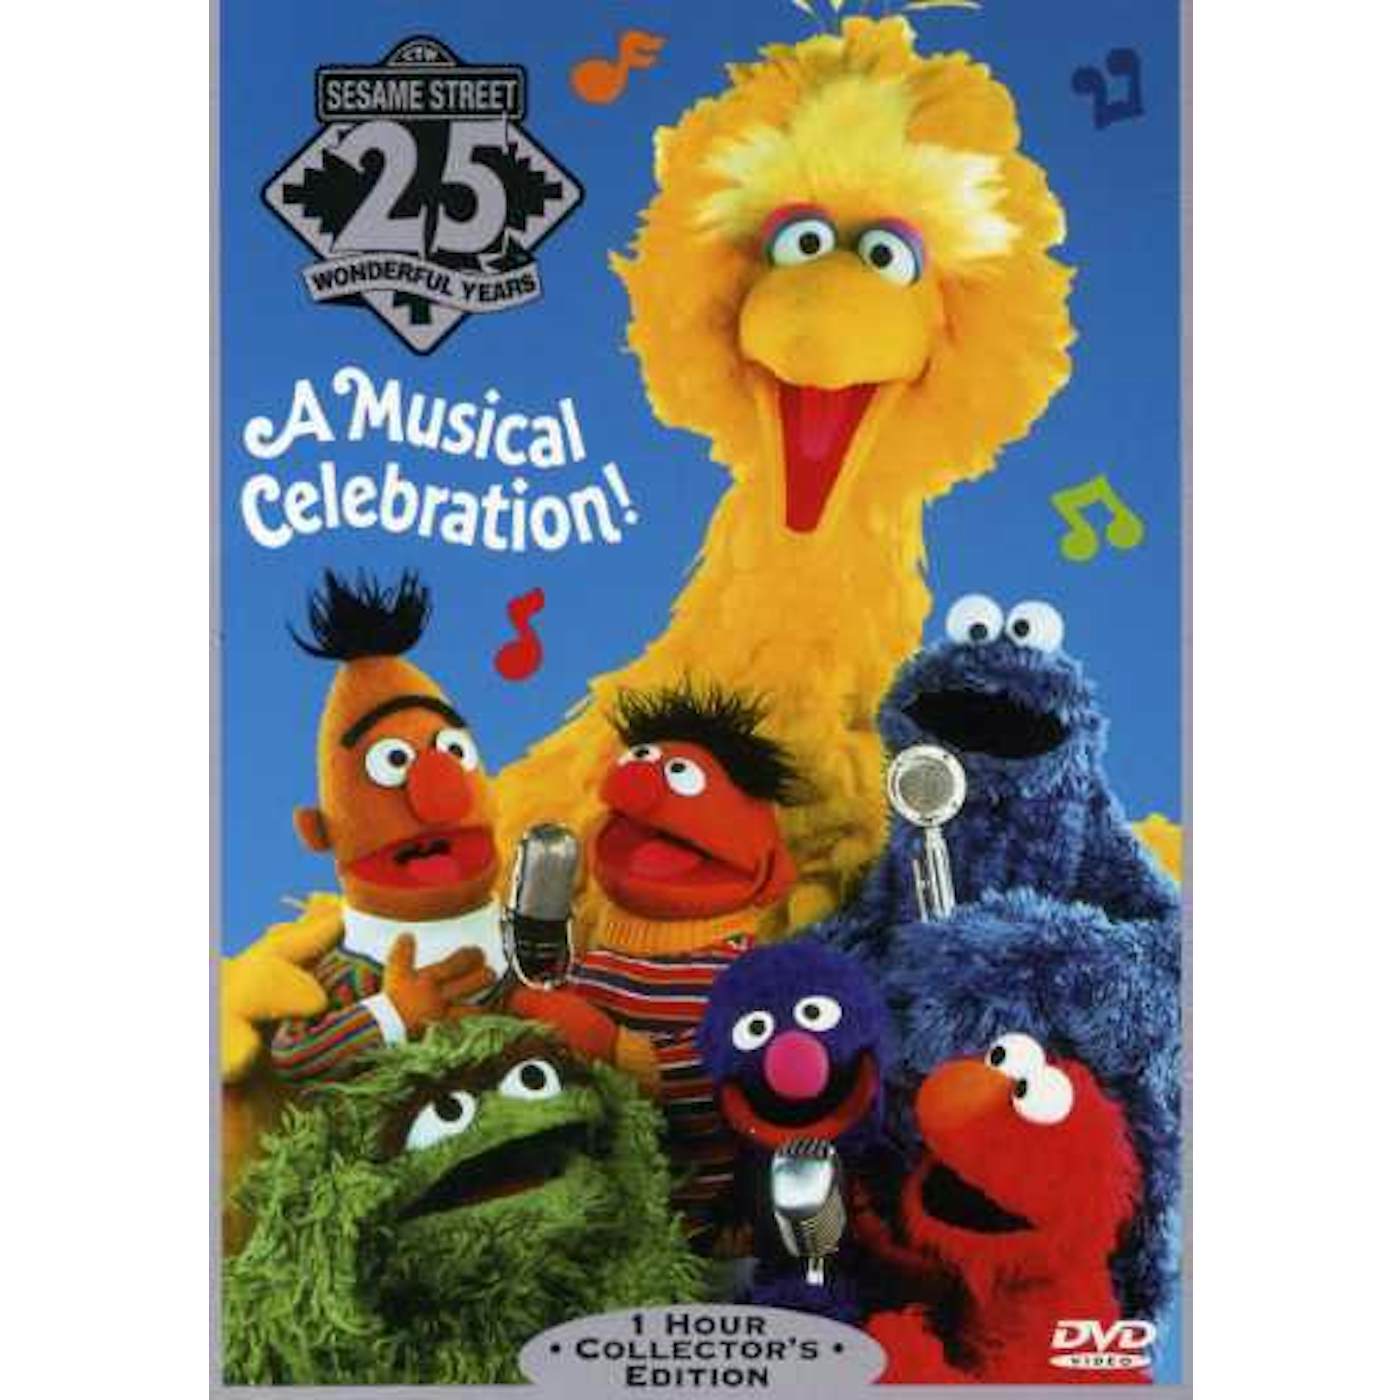 Sesame Street 25TH BIRTHDAY MUSICAL CELEBRATION DVD